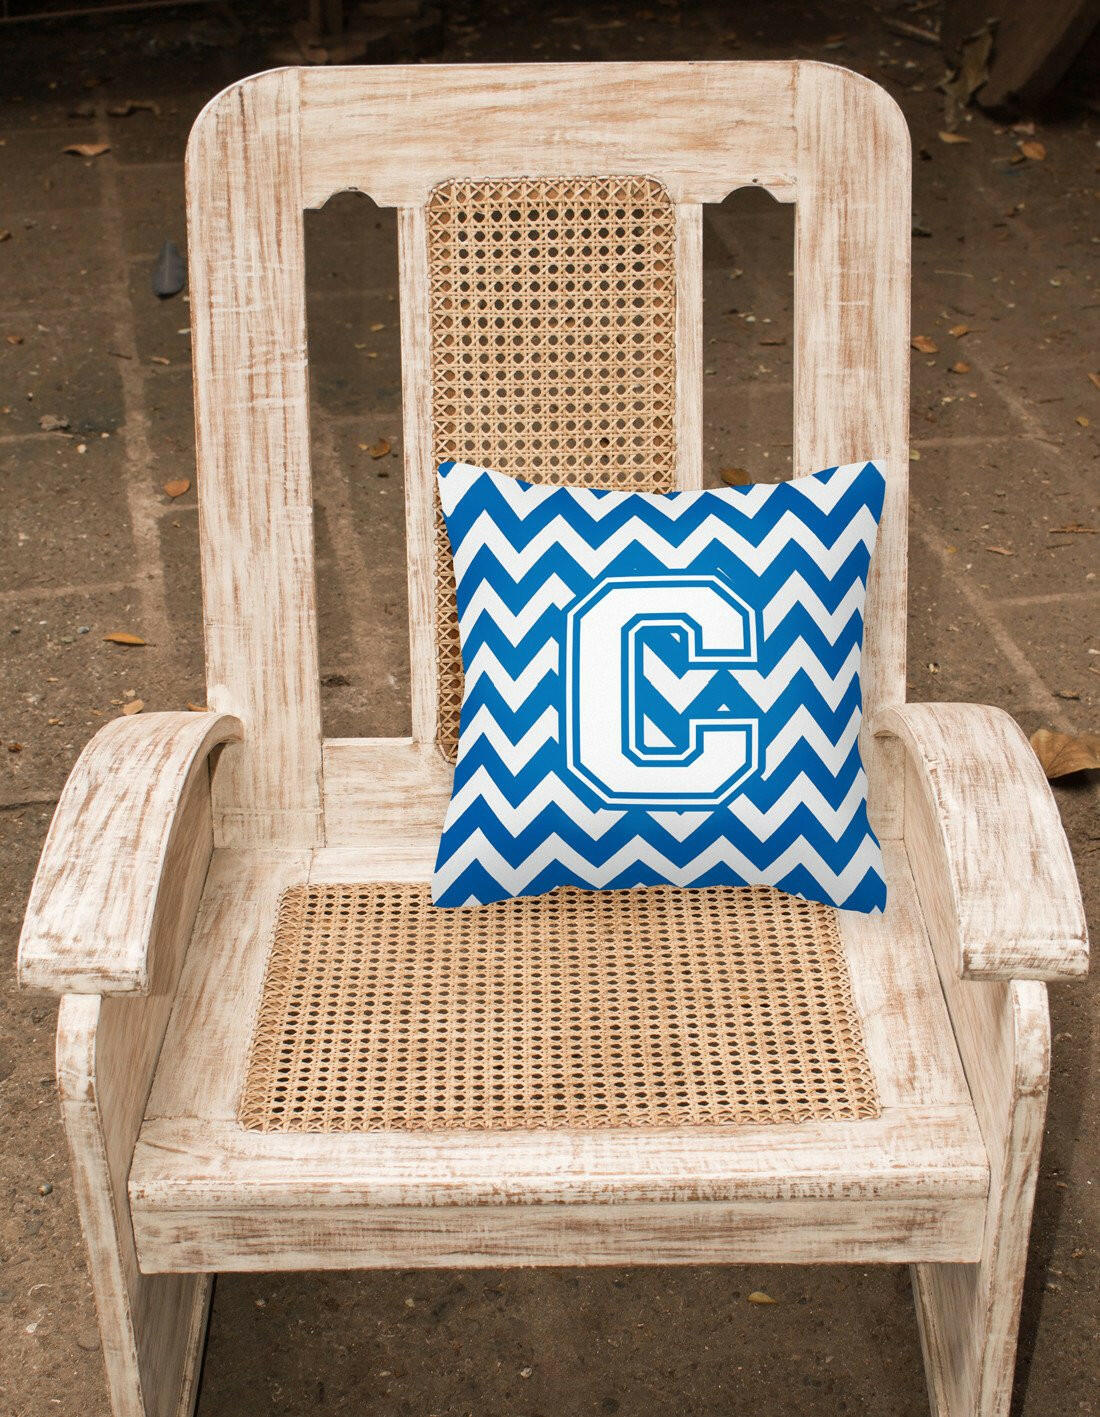 Letter C Chevron Blue and White Fabric Decorative Pillow CJ1045-CPW1414 - the-store.com